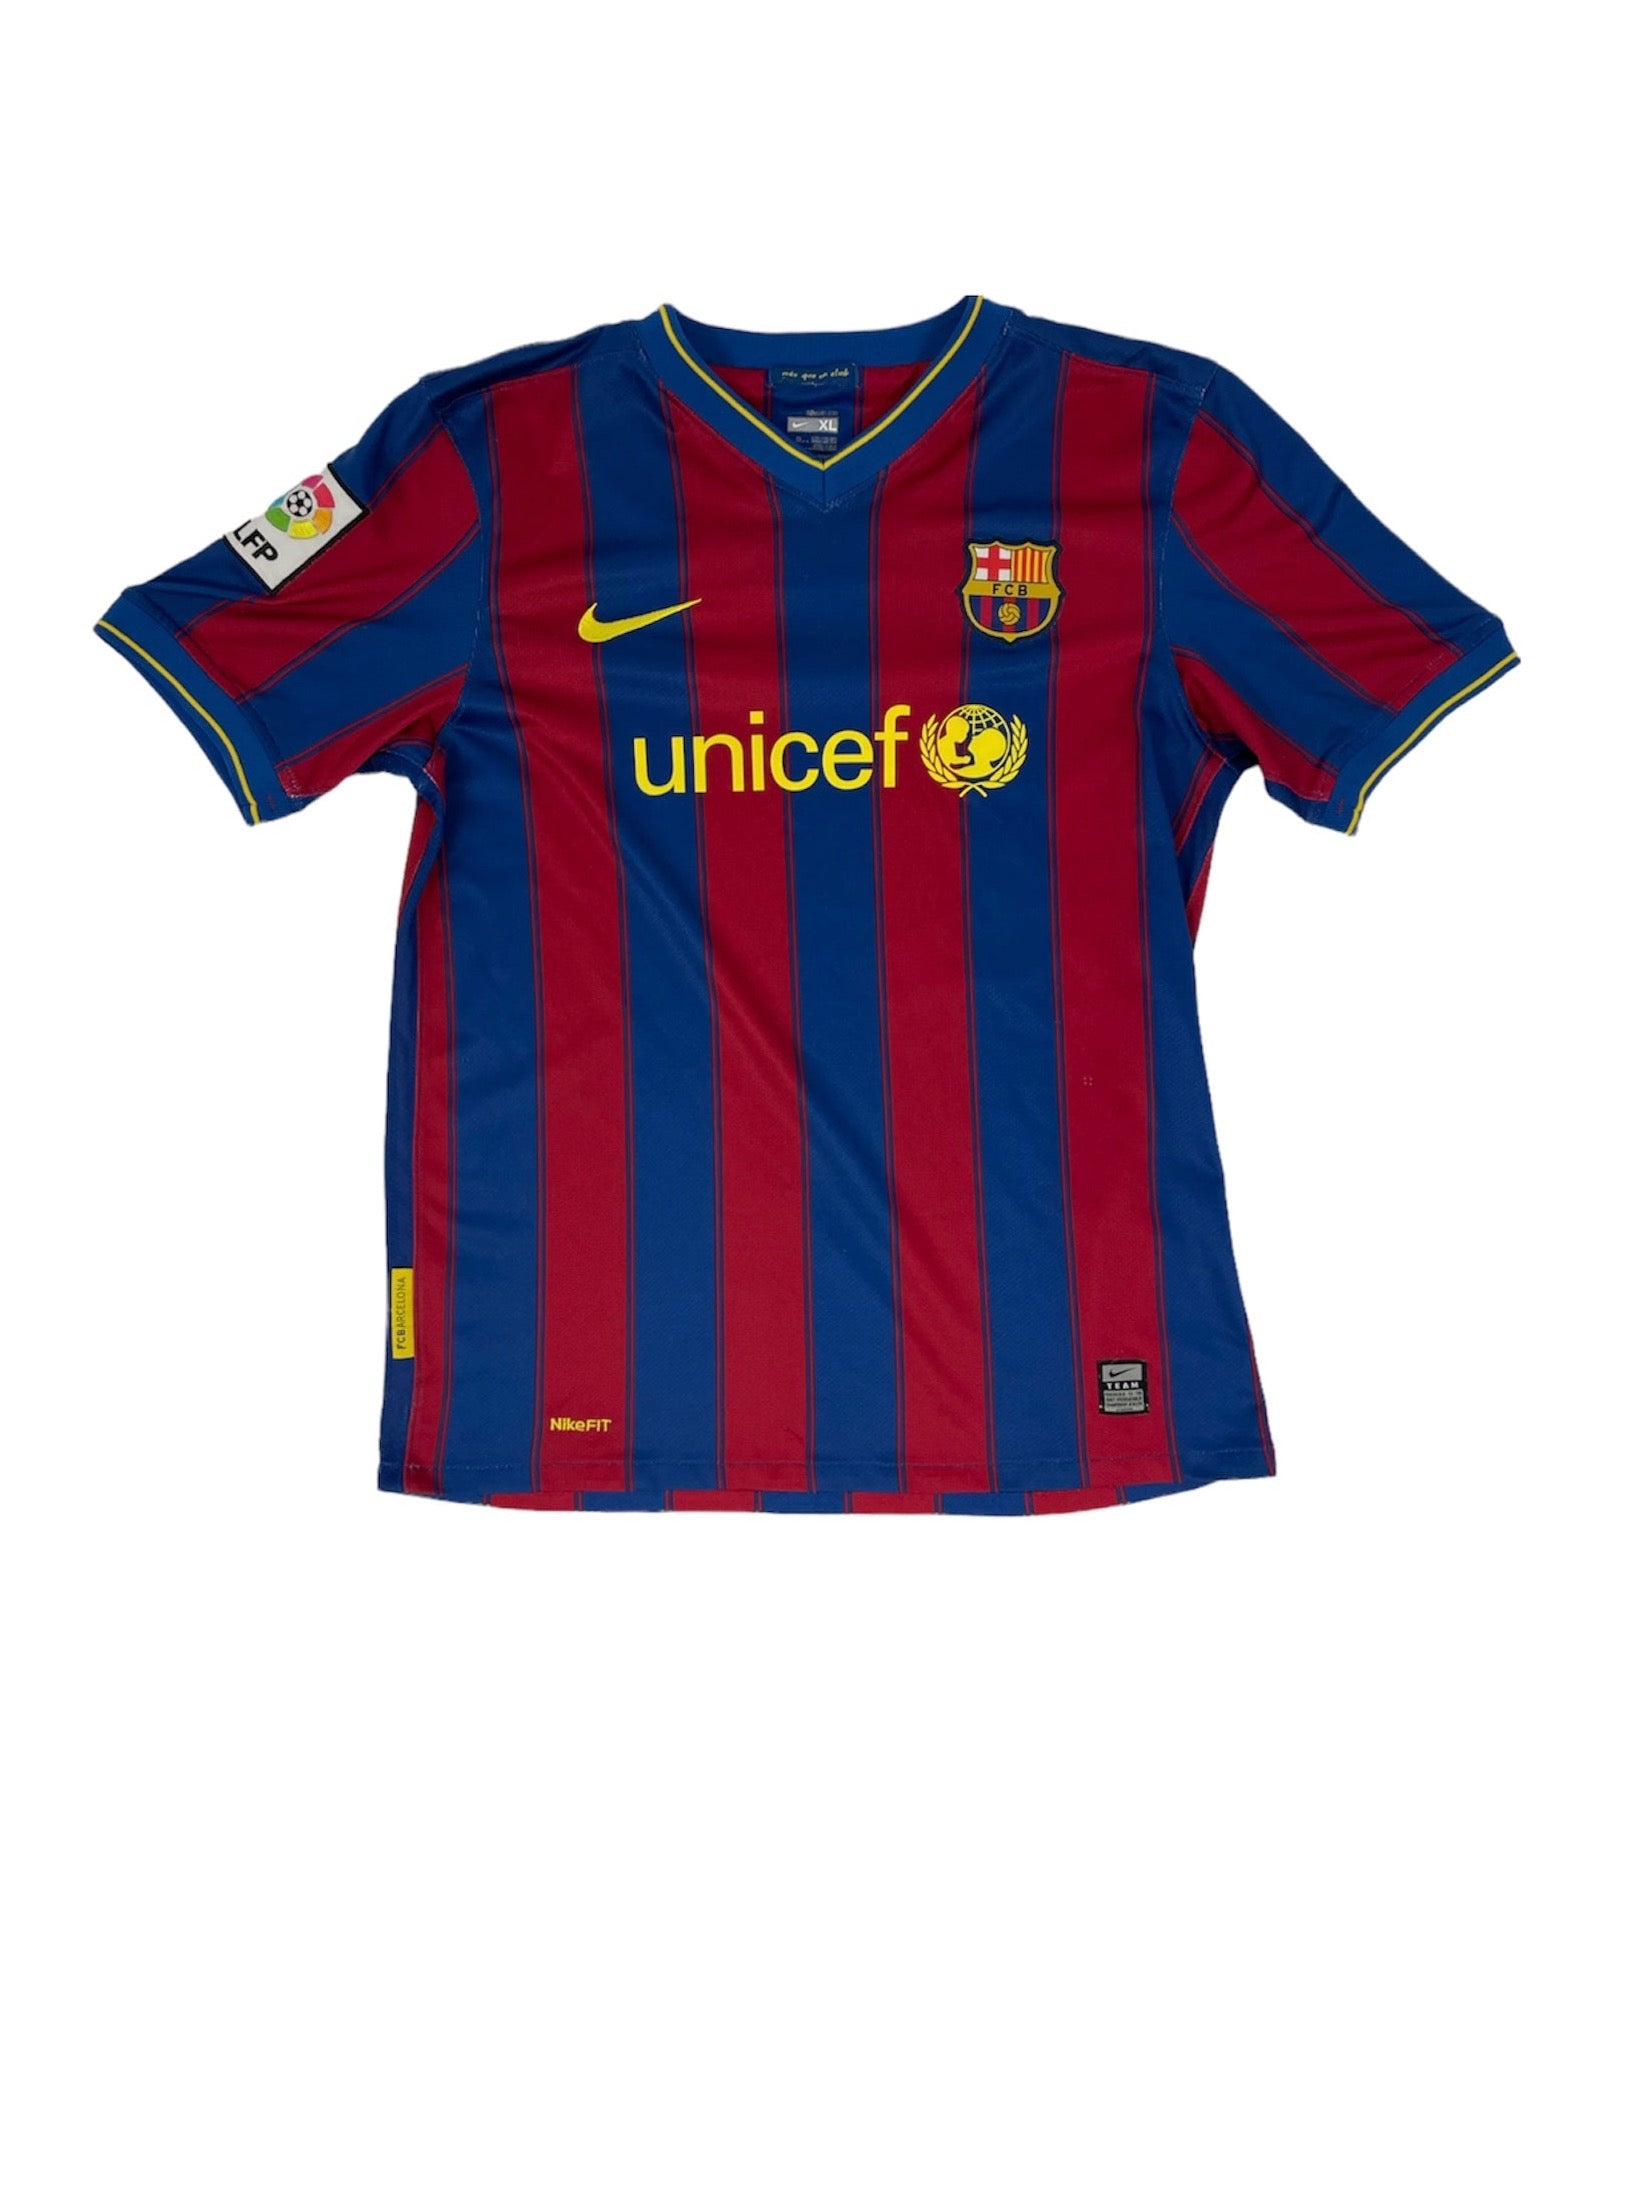 Mens Size Large Barcelona FCB UNICEF LFP Soccer Futbol Jersey Blue